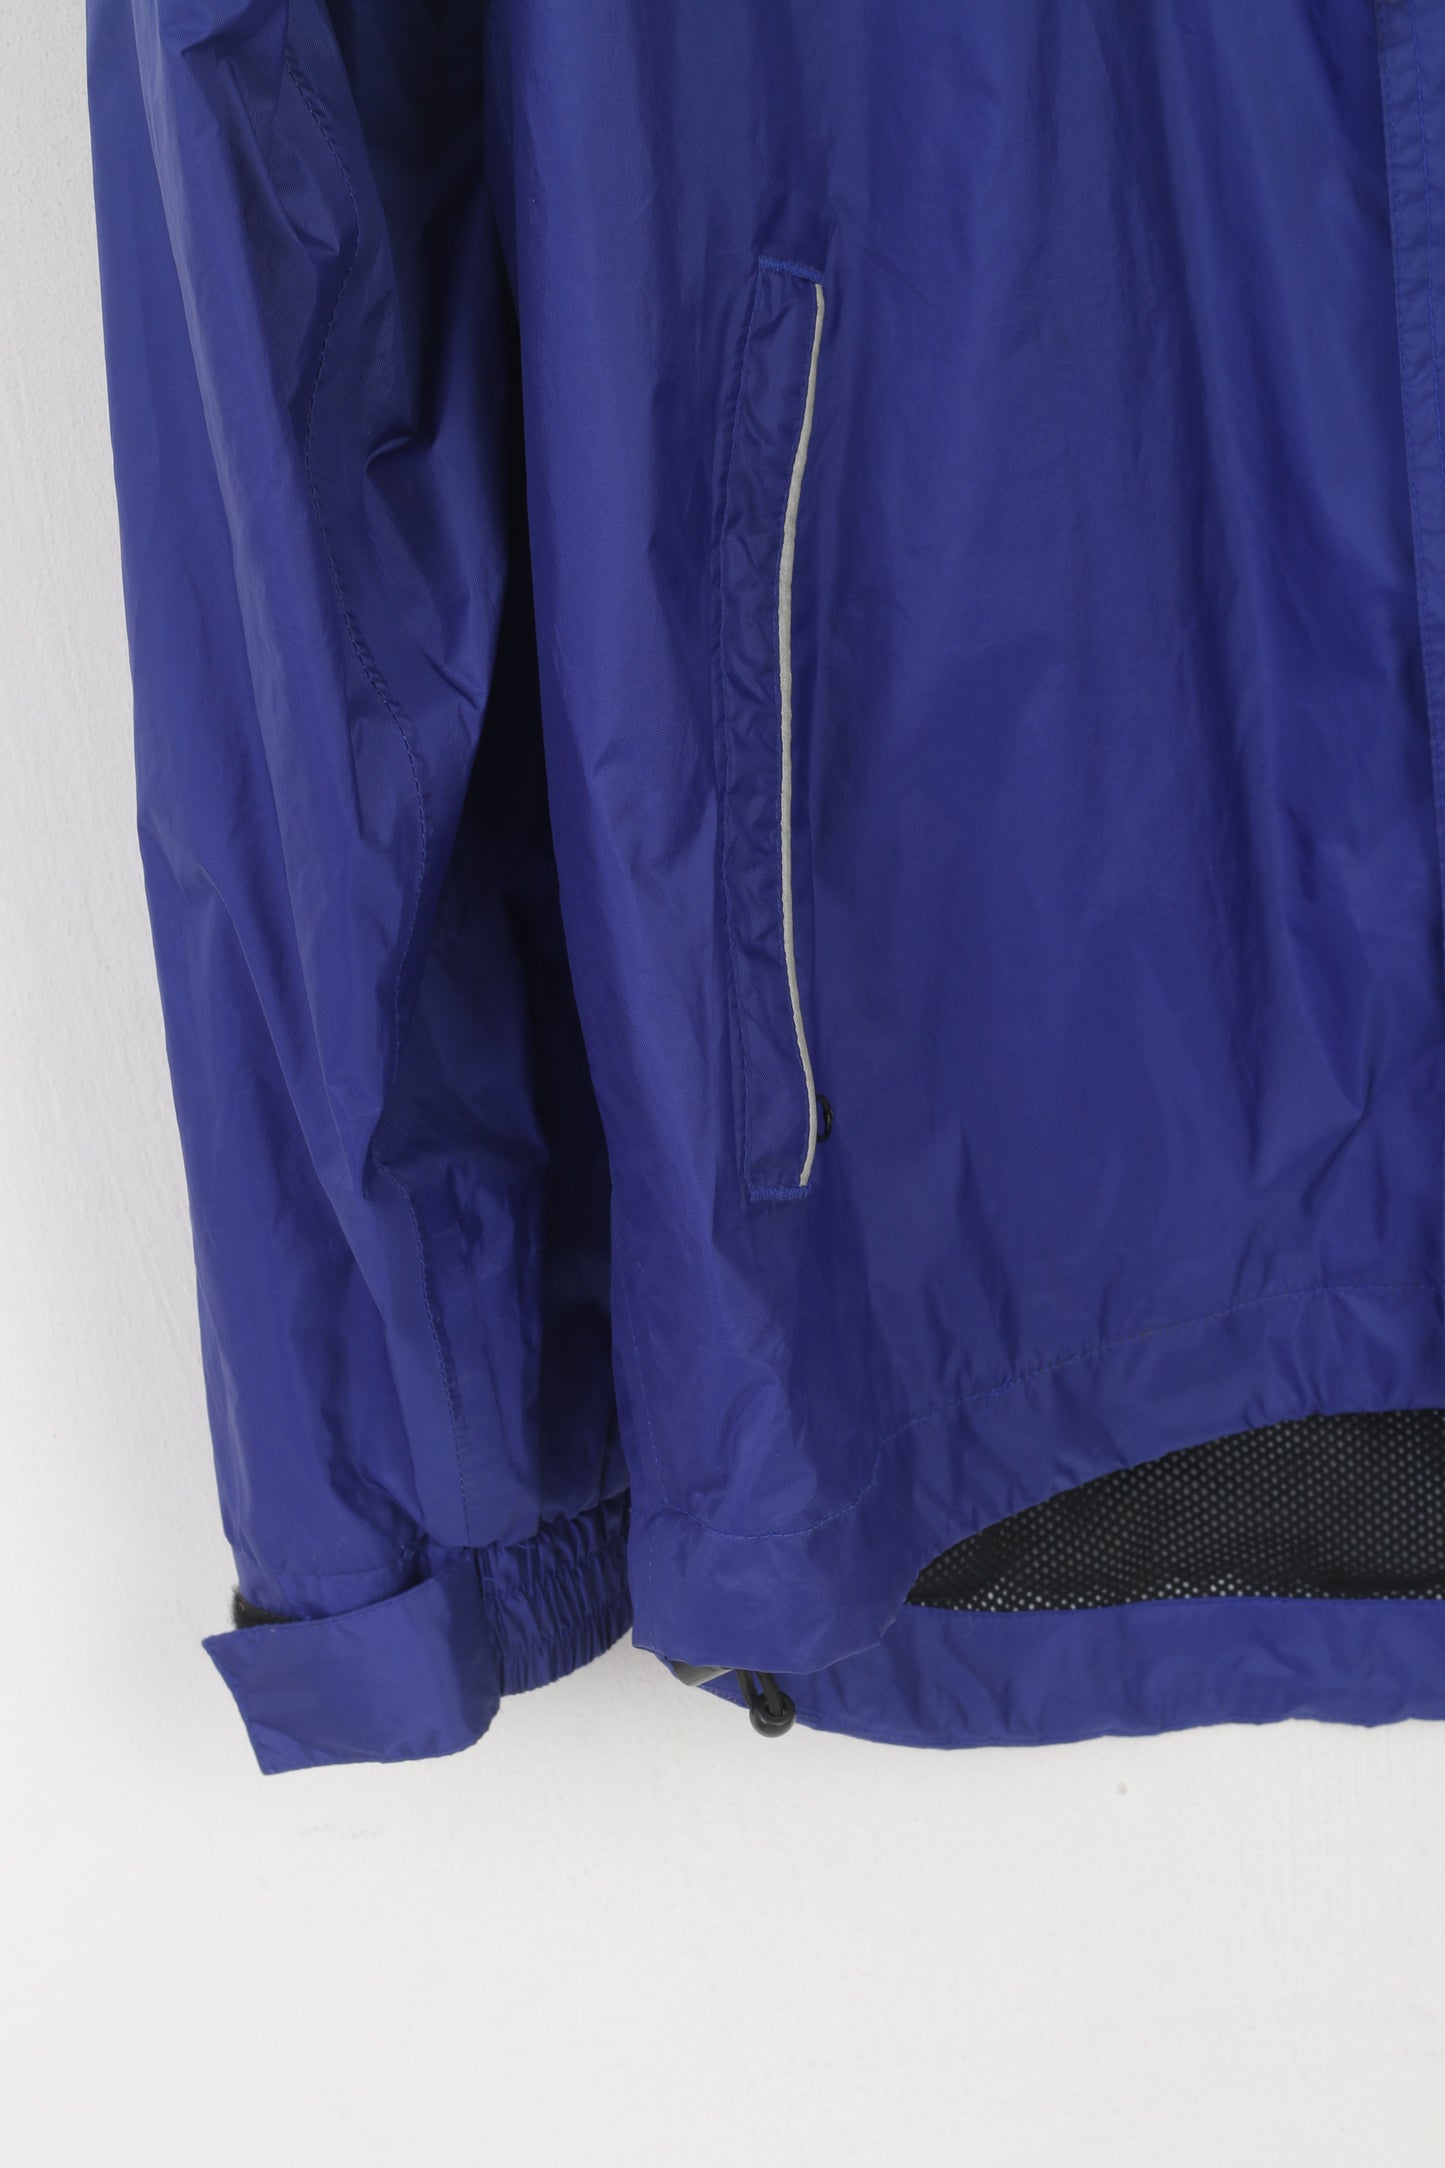 StoneHenge Men S Jacket Purple Nylon Waterproof Hooded Full Zip Windbreaker Top